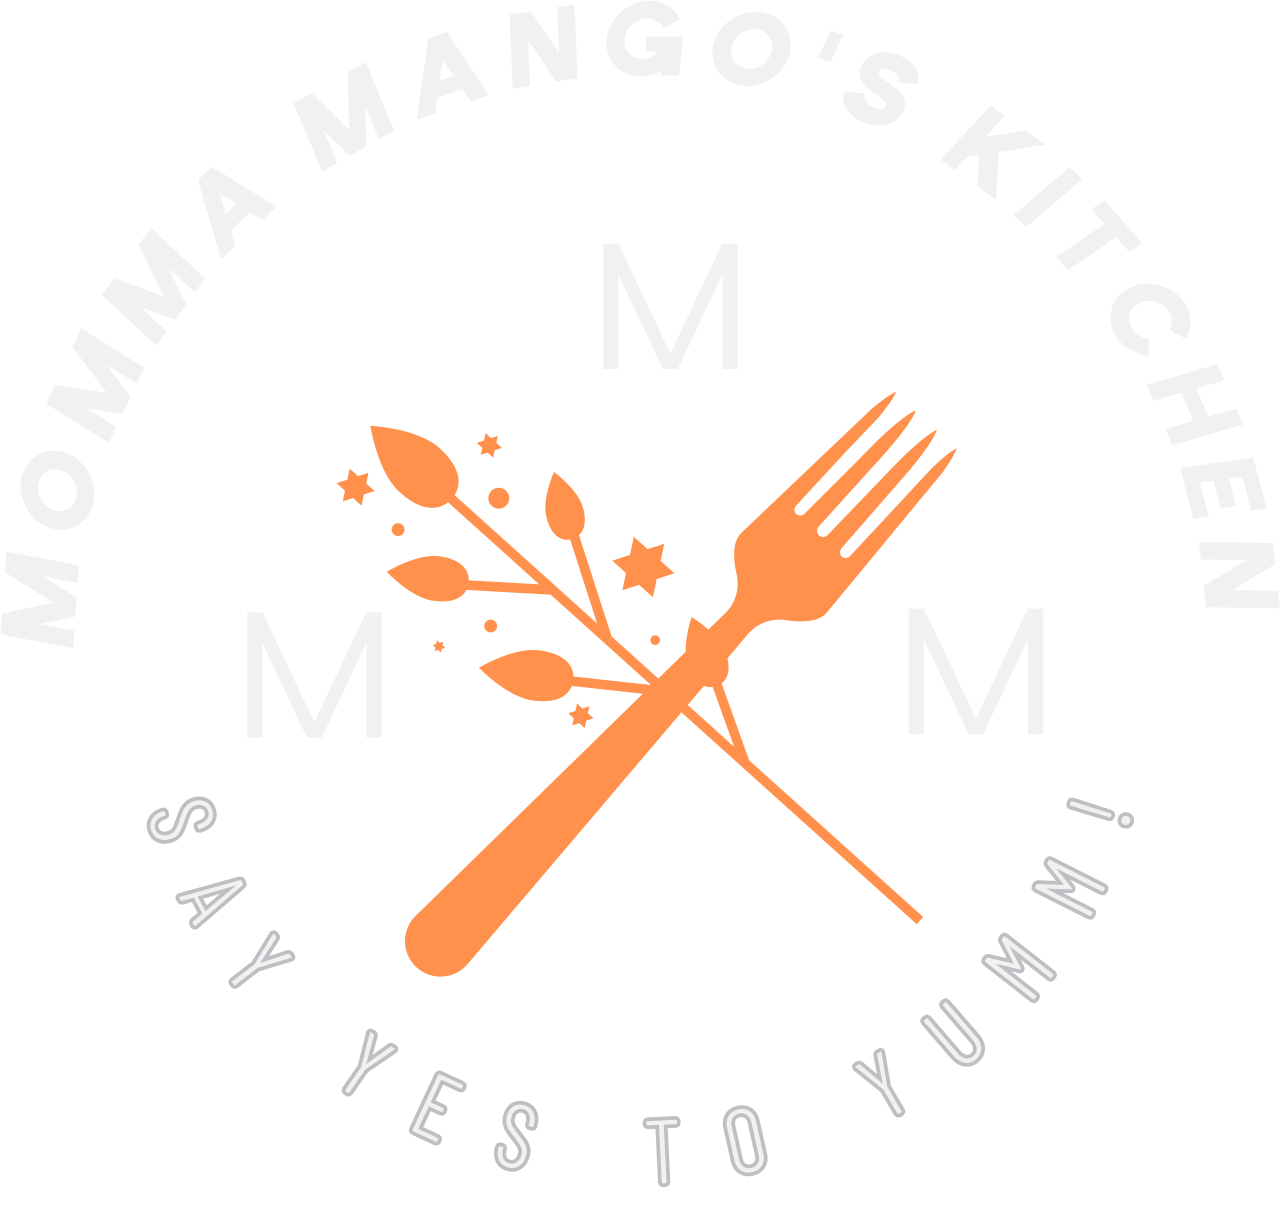 MOMMA MANGO'S KITCHEN 's logo